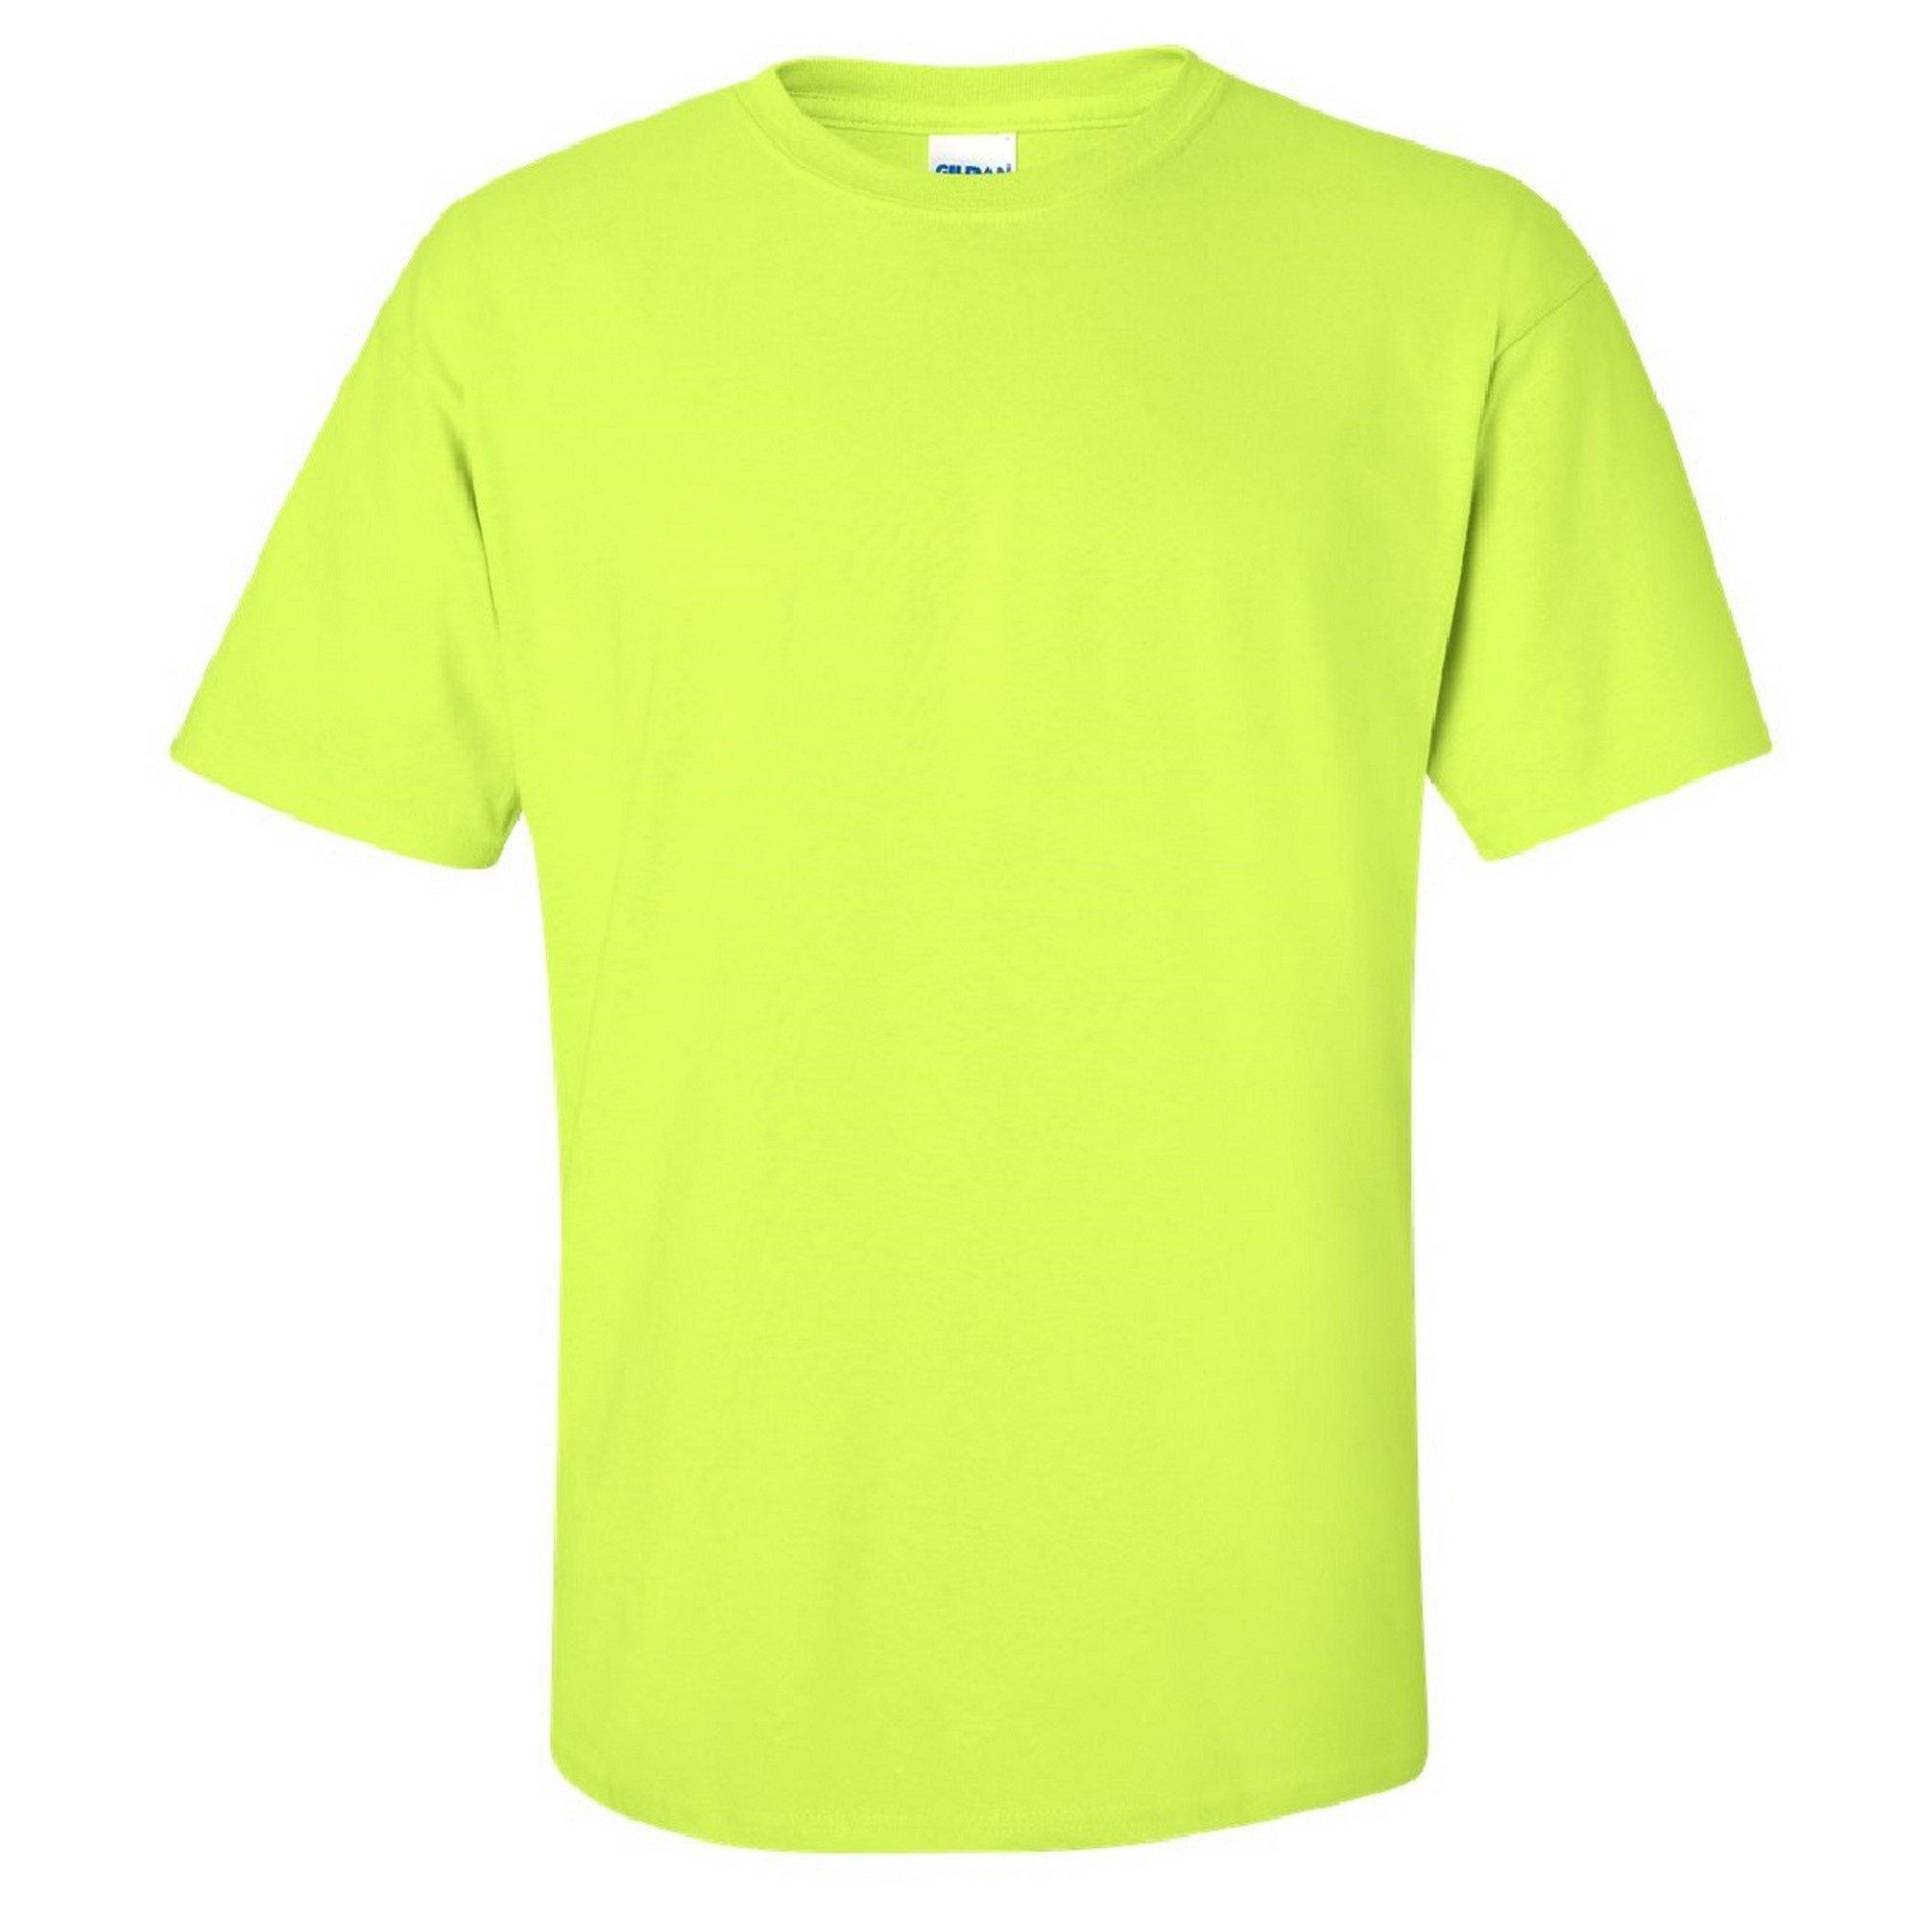 Ultra Tshirt Herren Gelb Bunt M von Gildan